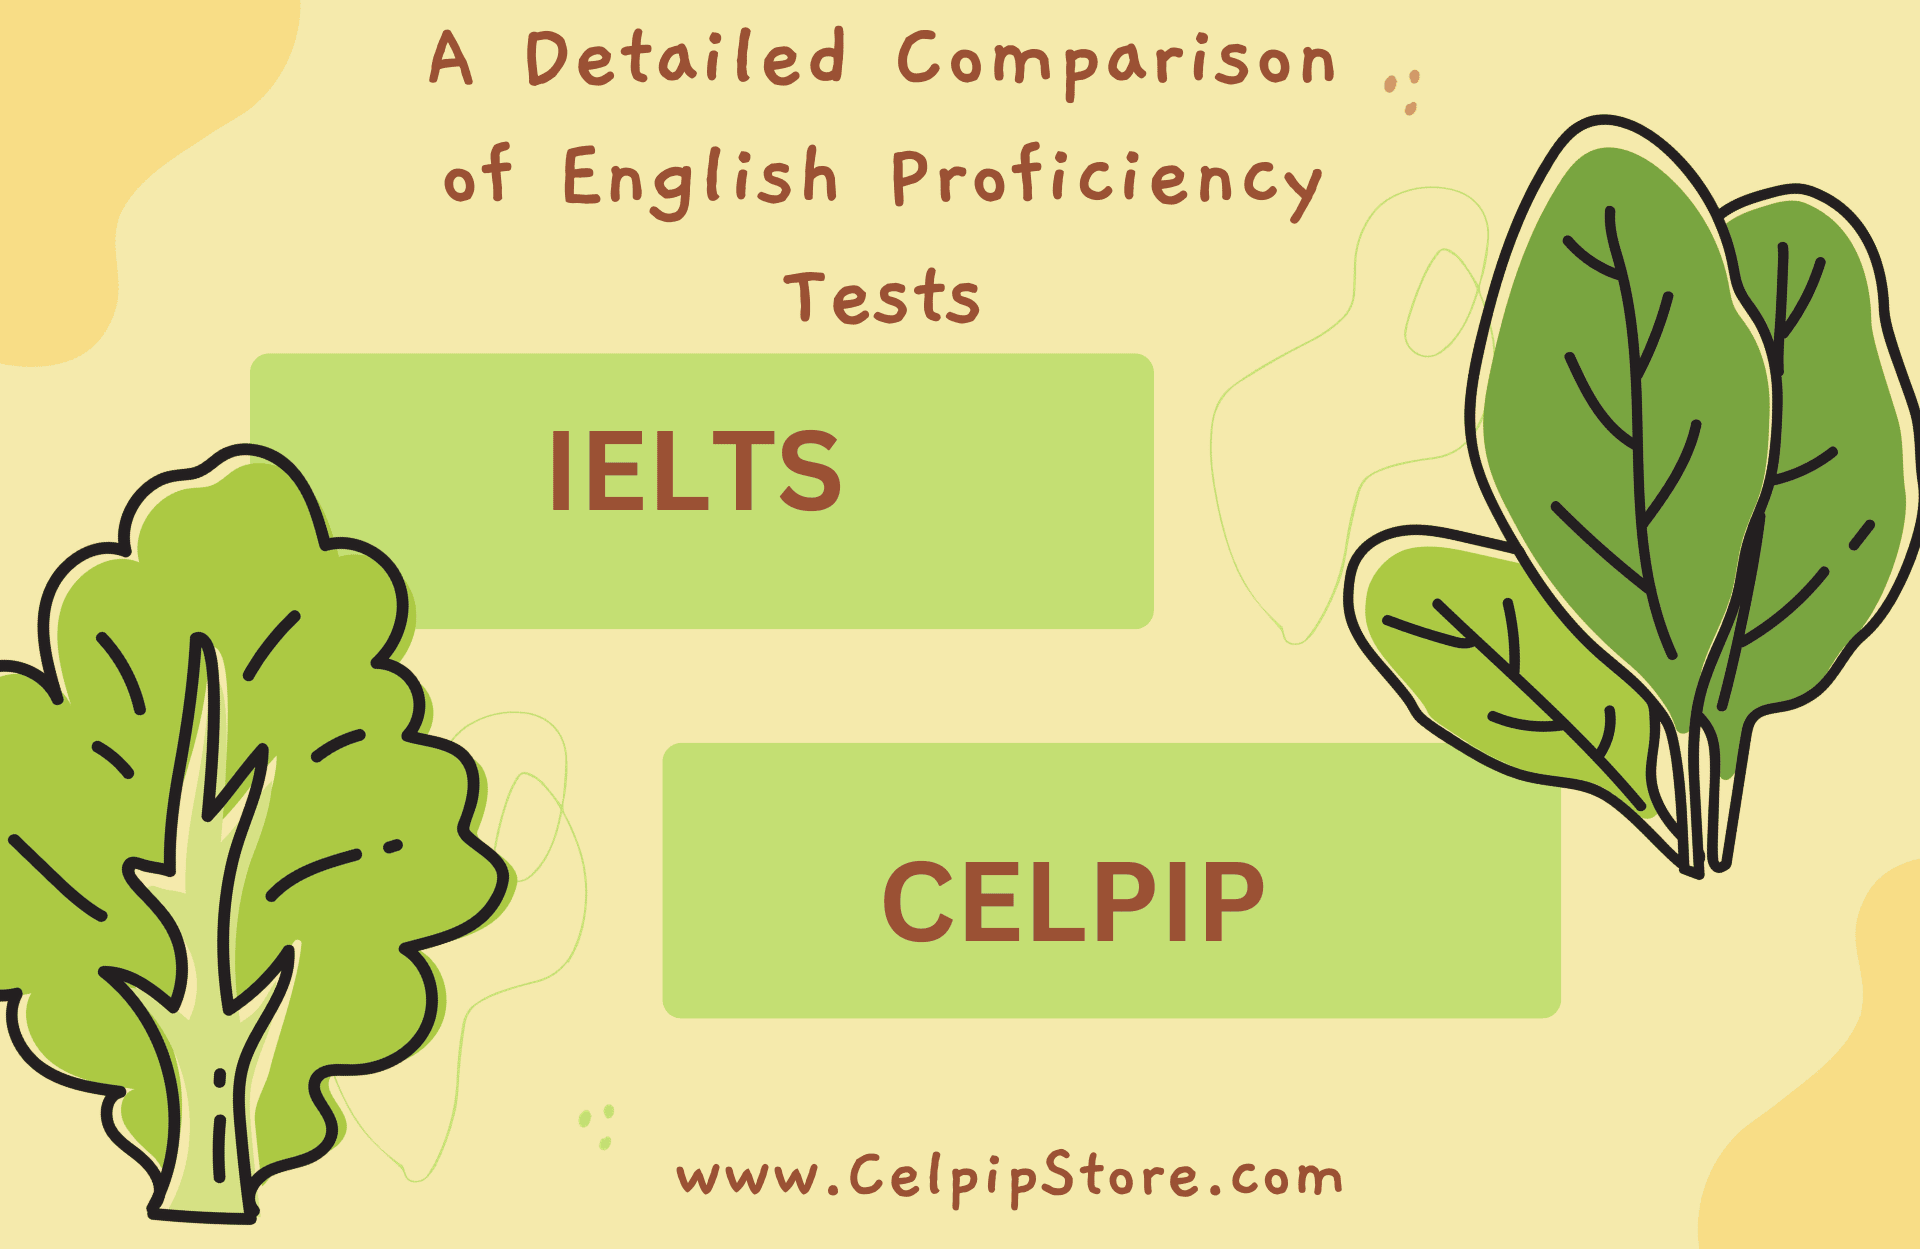 IELTS vs. CELPIP: A Detailed Comparison of English Proficiency Tests